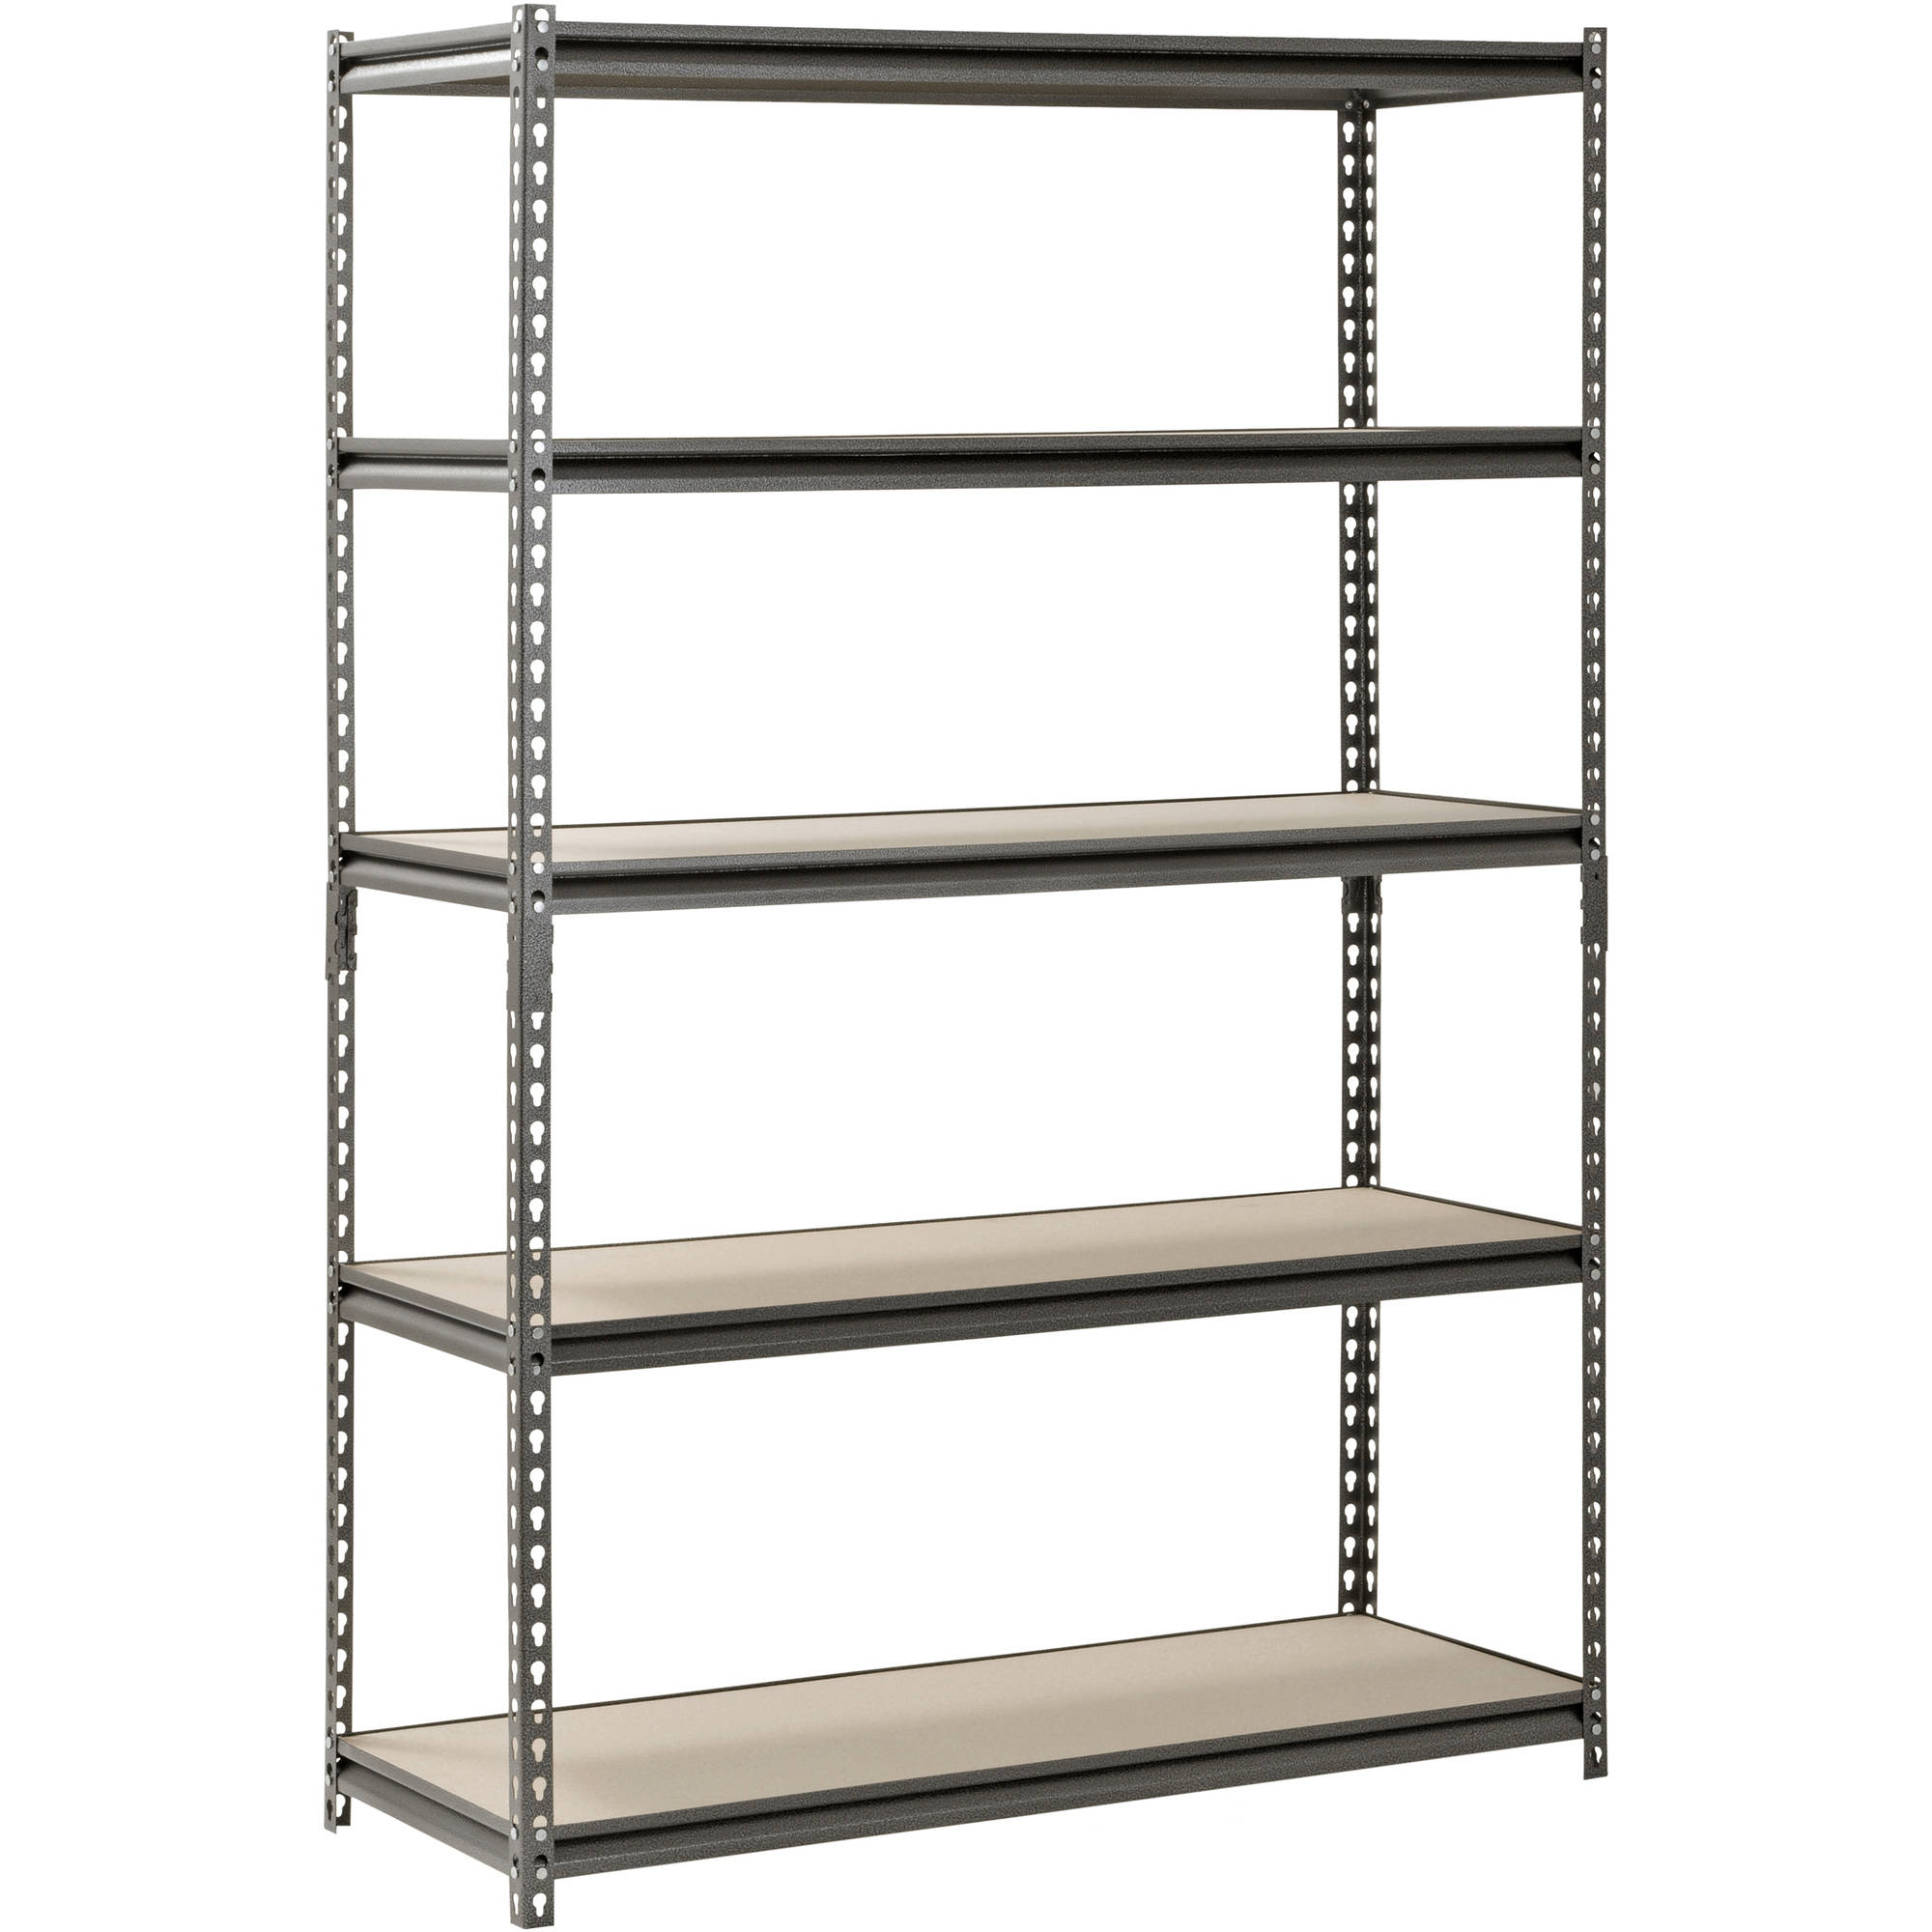 Muscle Rack 48"W x 18"D x 72"H 5-Shelf Steel Freestanding Shelves, Silver - image 1 of 7